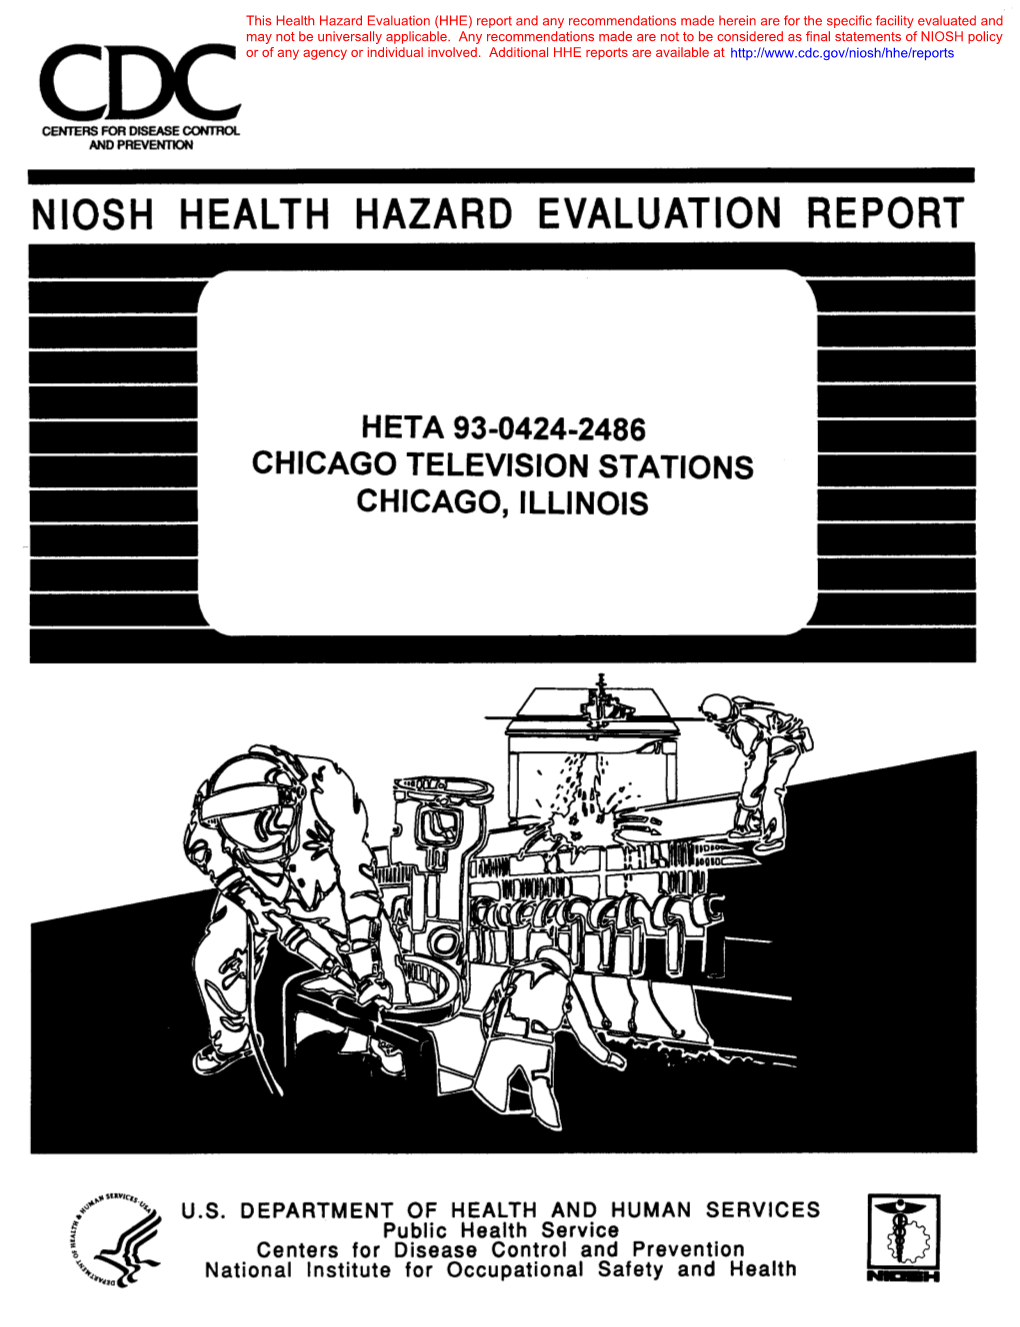 HHE Report No. HETA-1993-0424-2486, Chicago